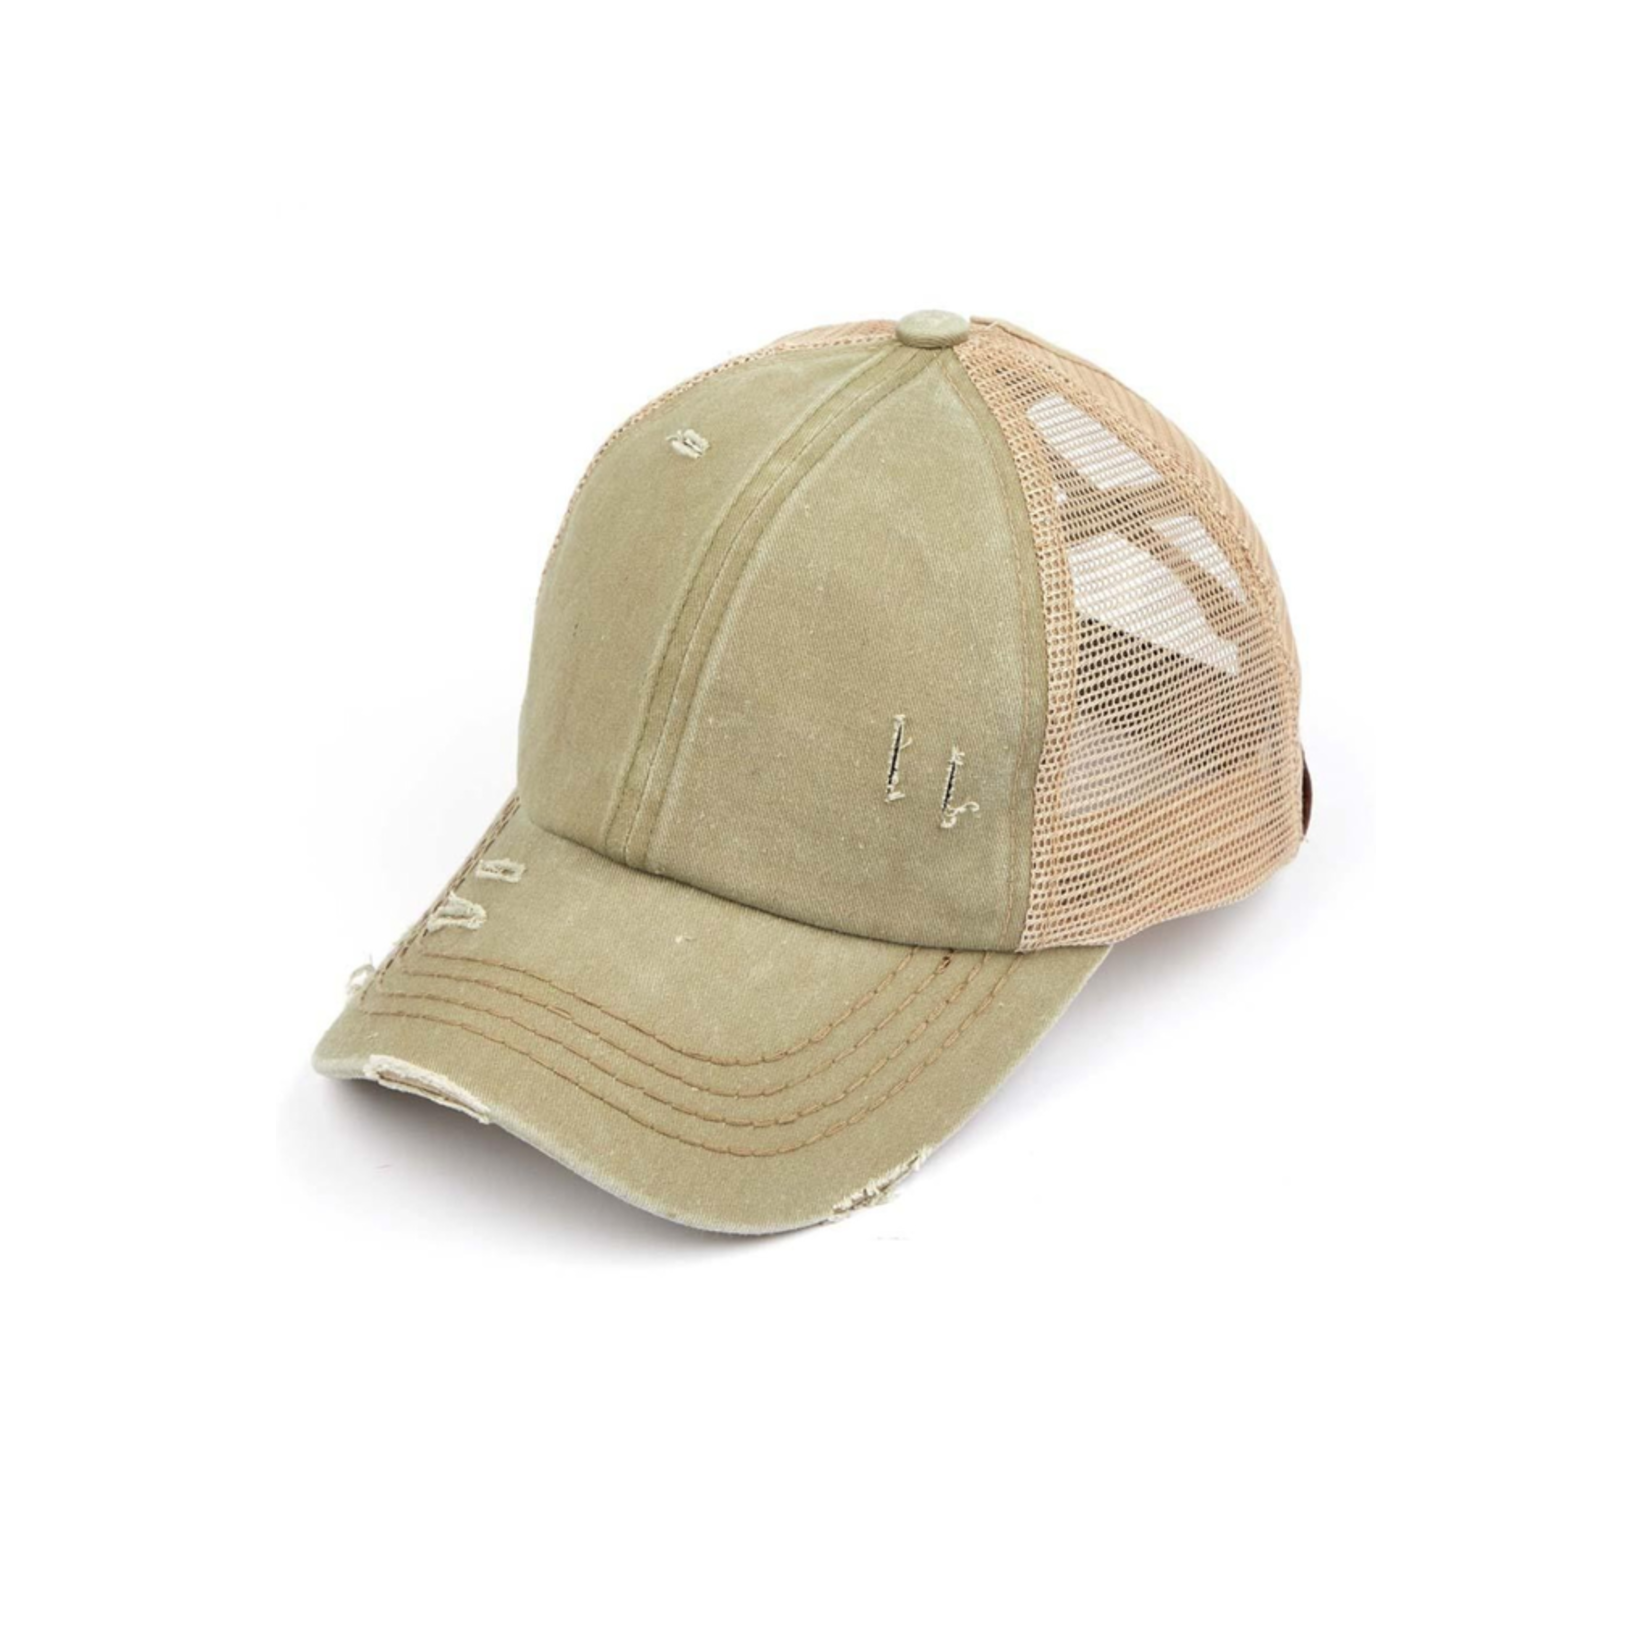 CC Distressed Ponytail hat